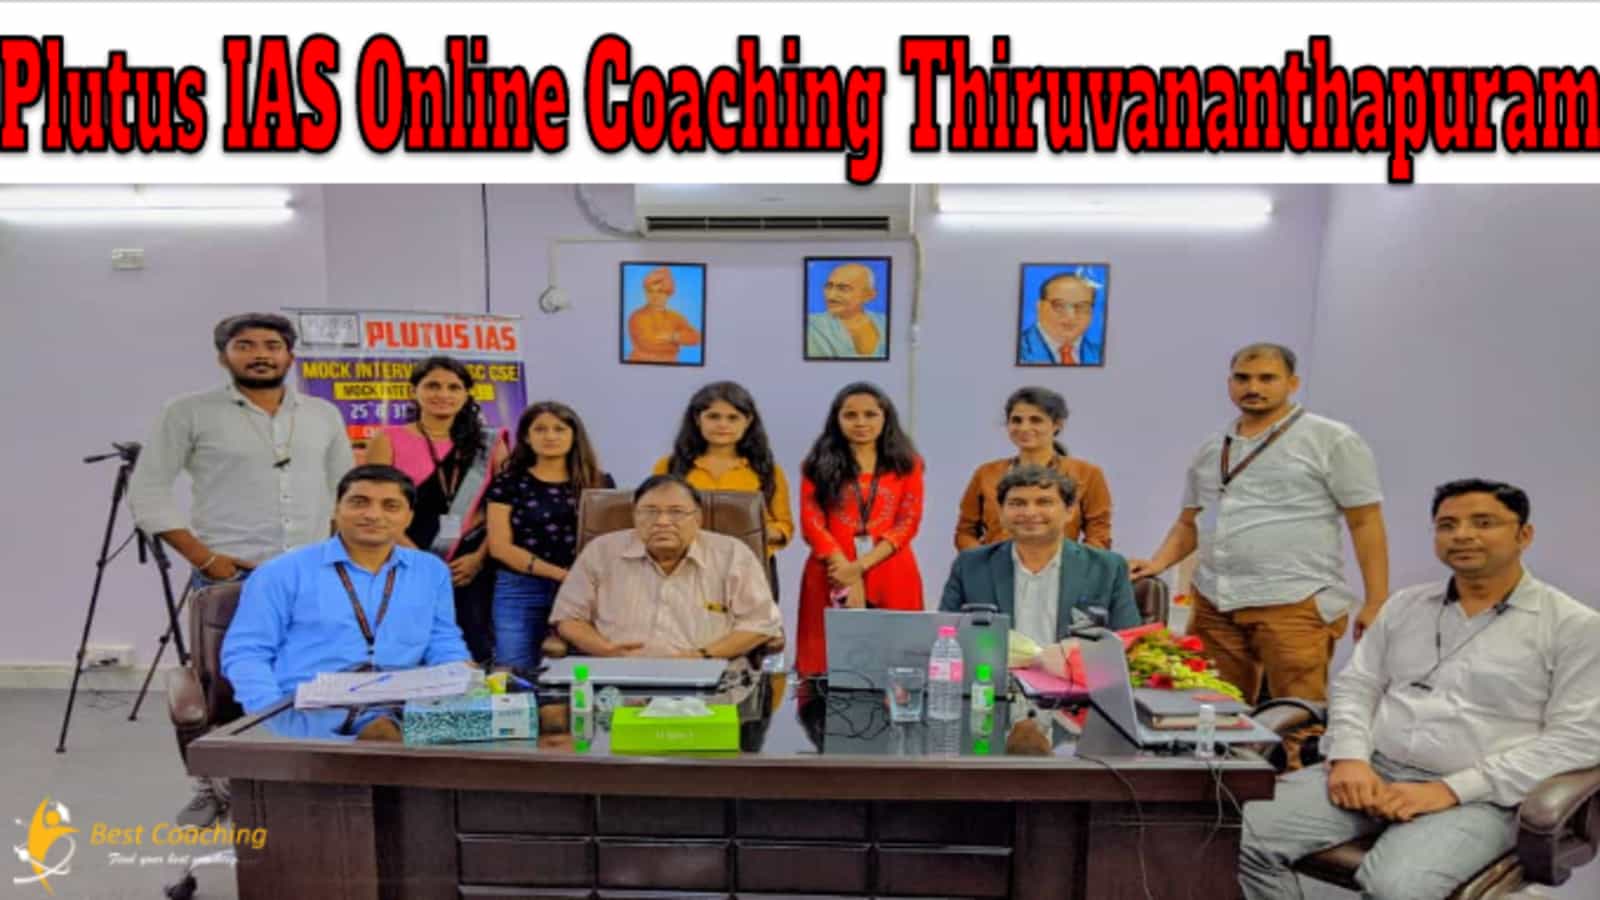 Plutus IAS Online Coaching Thiruvananthapuram